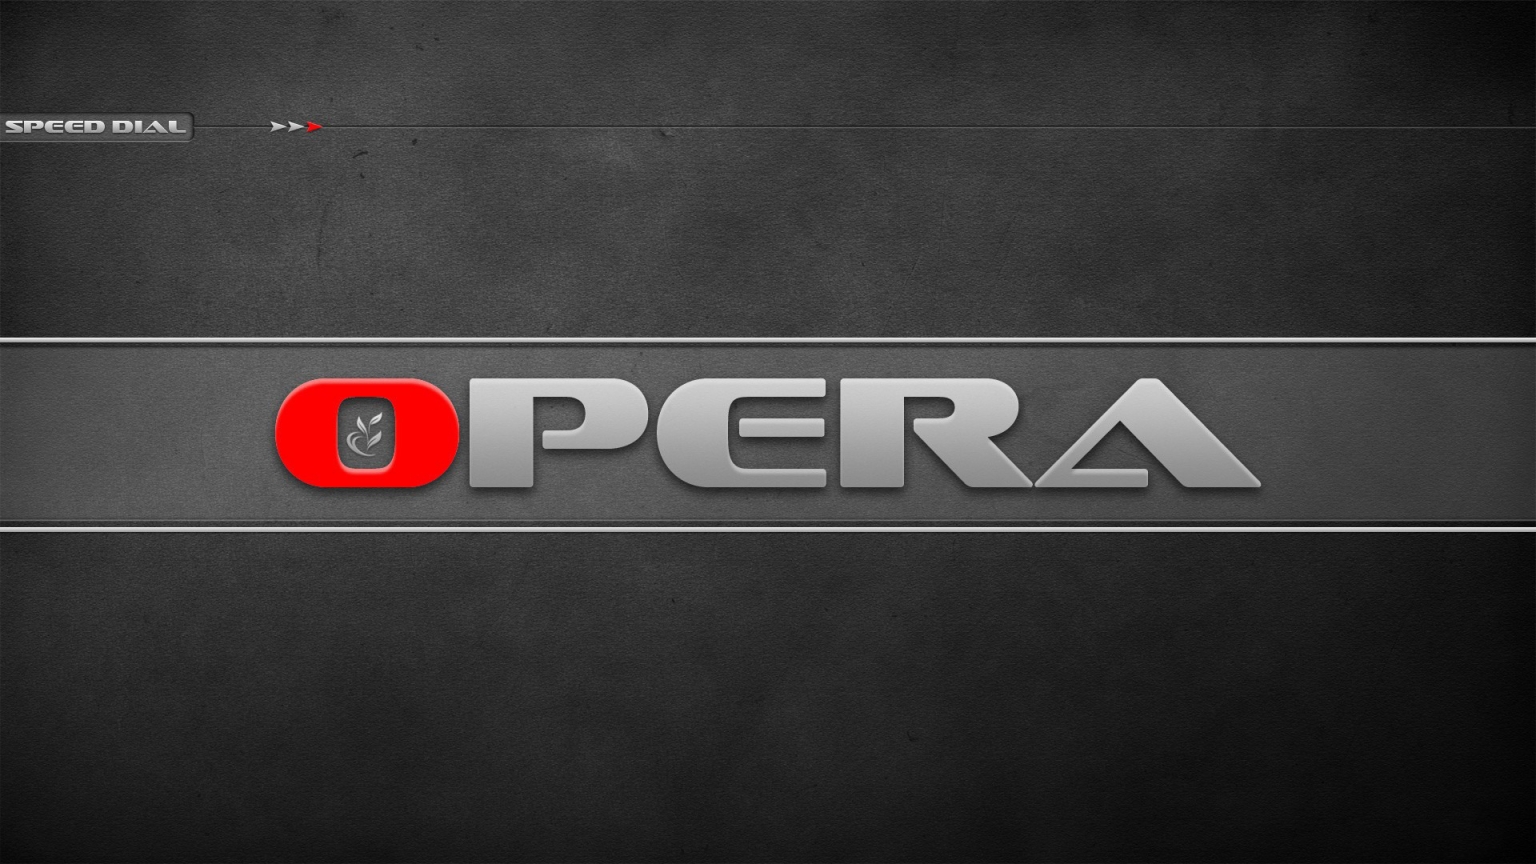 Opera for 1536 x 864 HDTV resolution